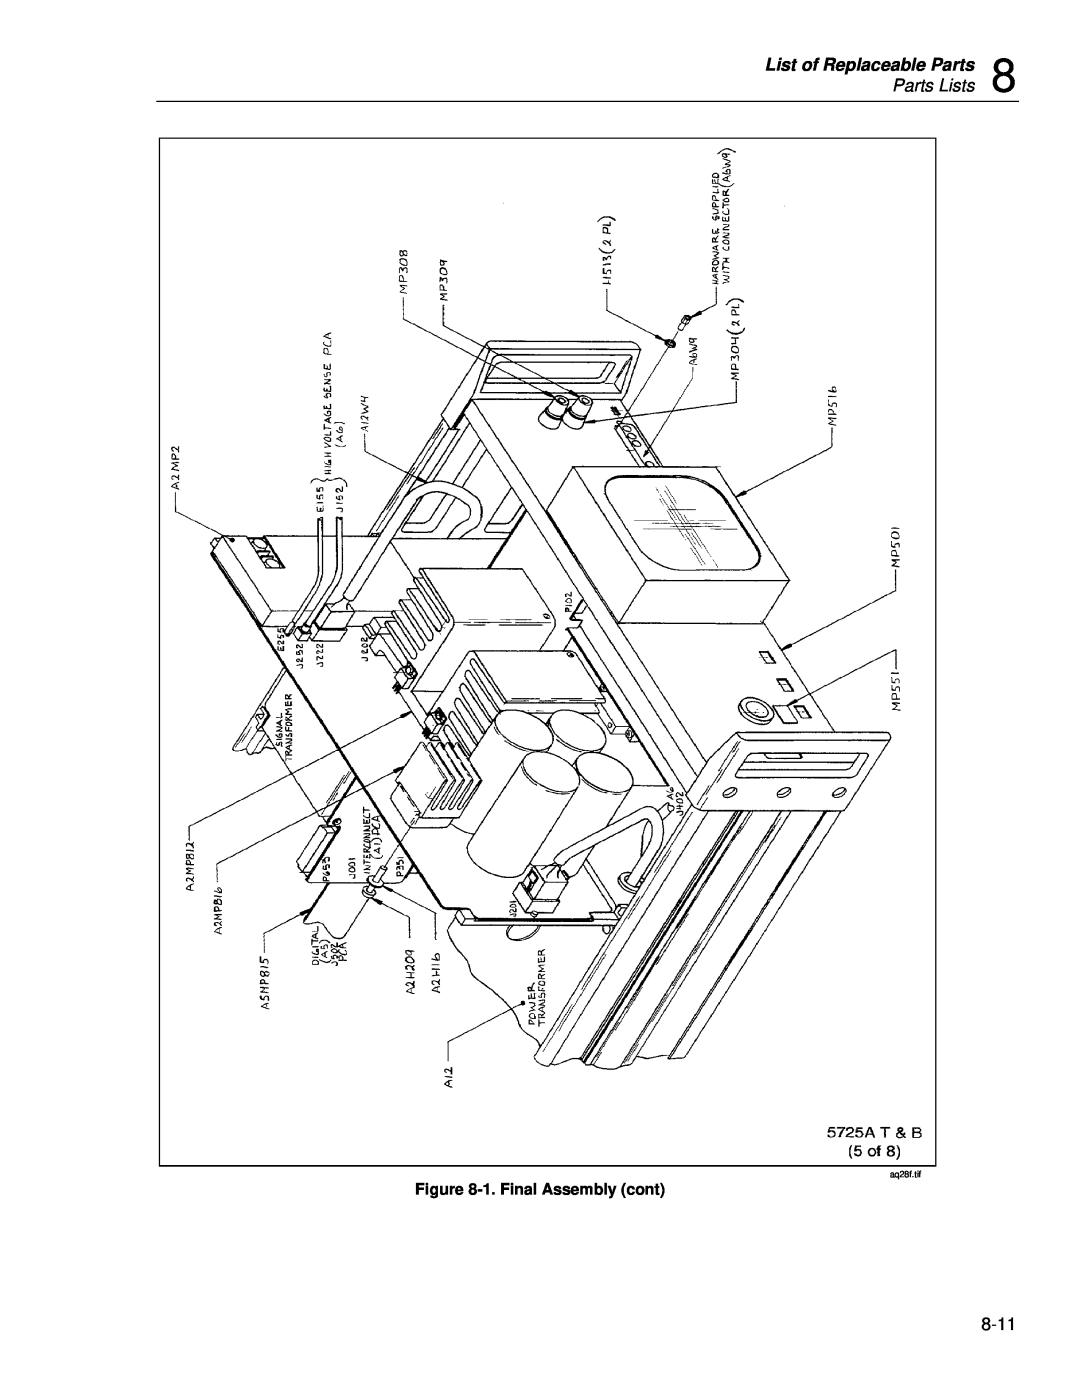 Fluke 5725A instruction manual List of Replaceable Parts, Parts Lists, 1.Final Assembly cont, aq28f.tif 